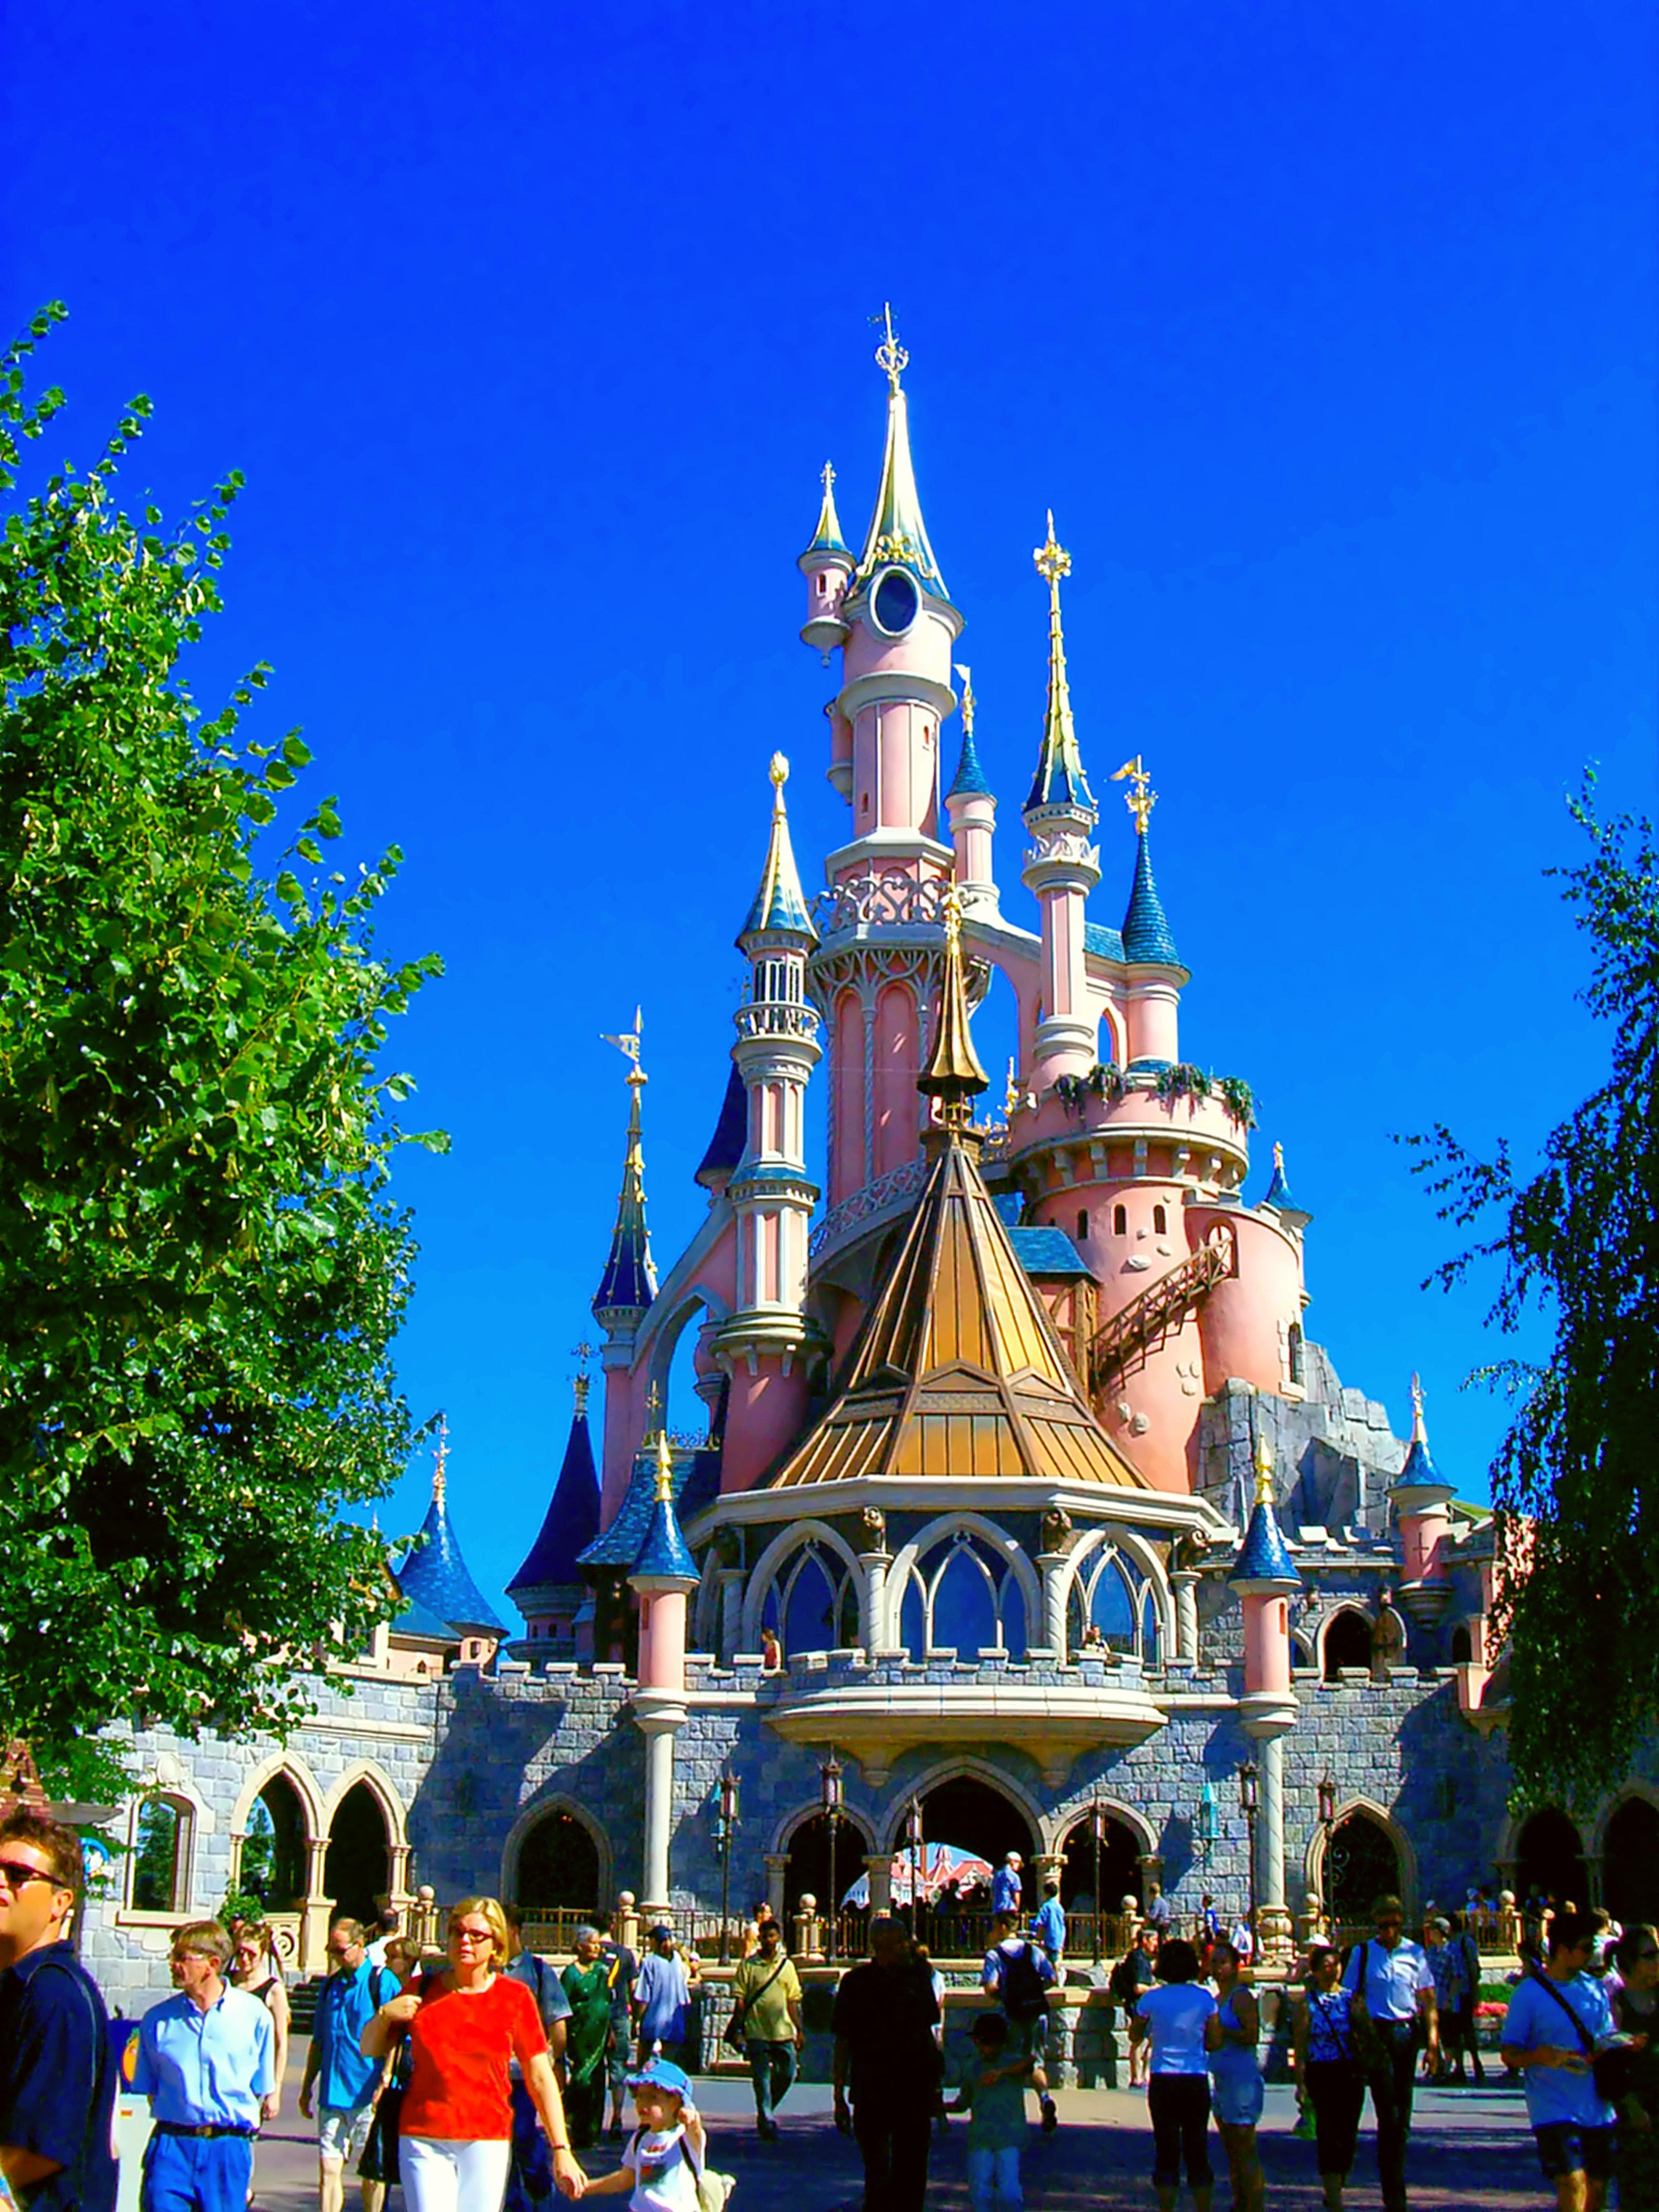 What can you buy in Disneyland Paris? 